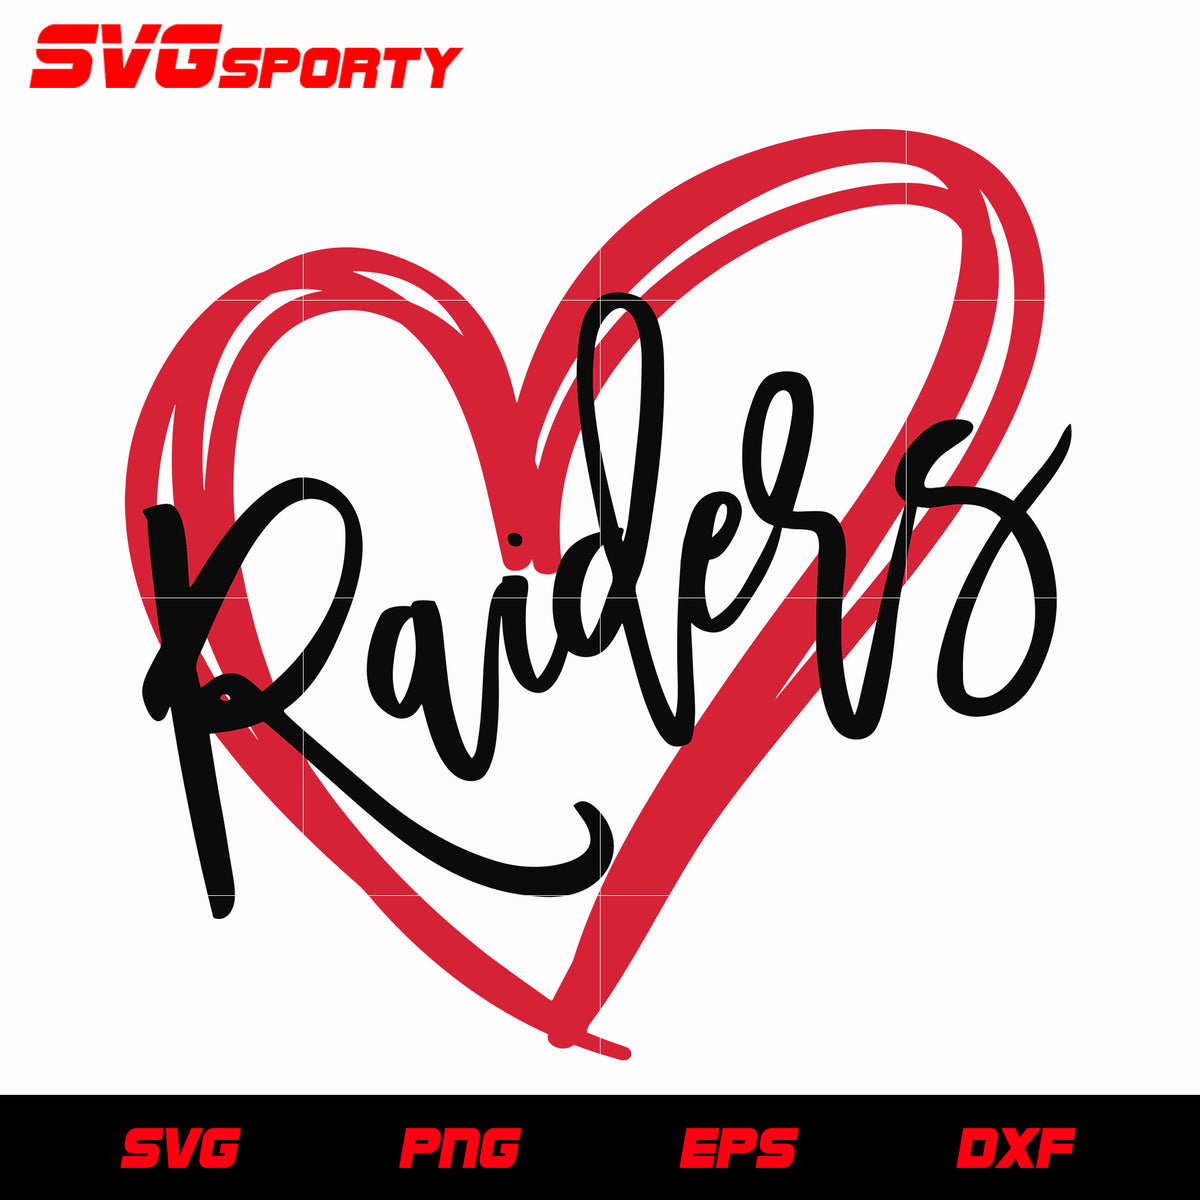 I Love My Heart Las Vegas Raiders,NFL Svg, Football Svg, Cri